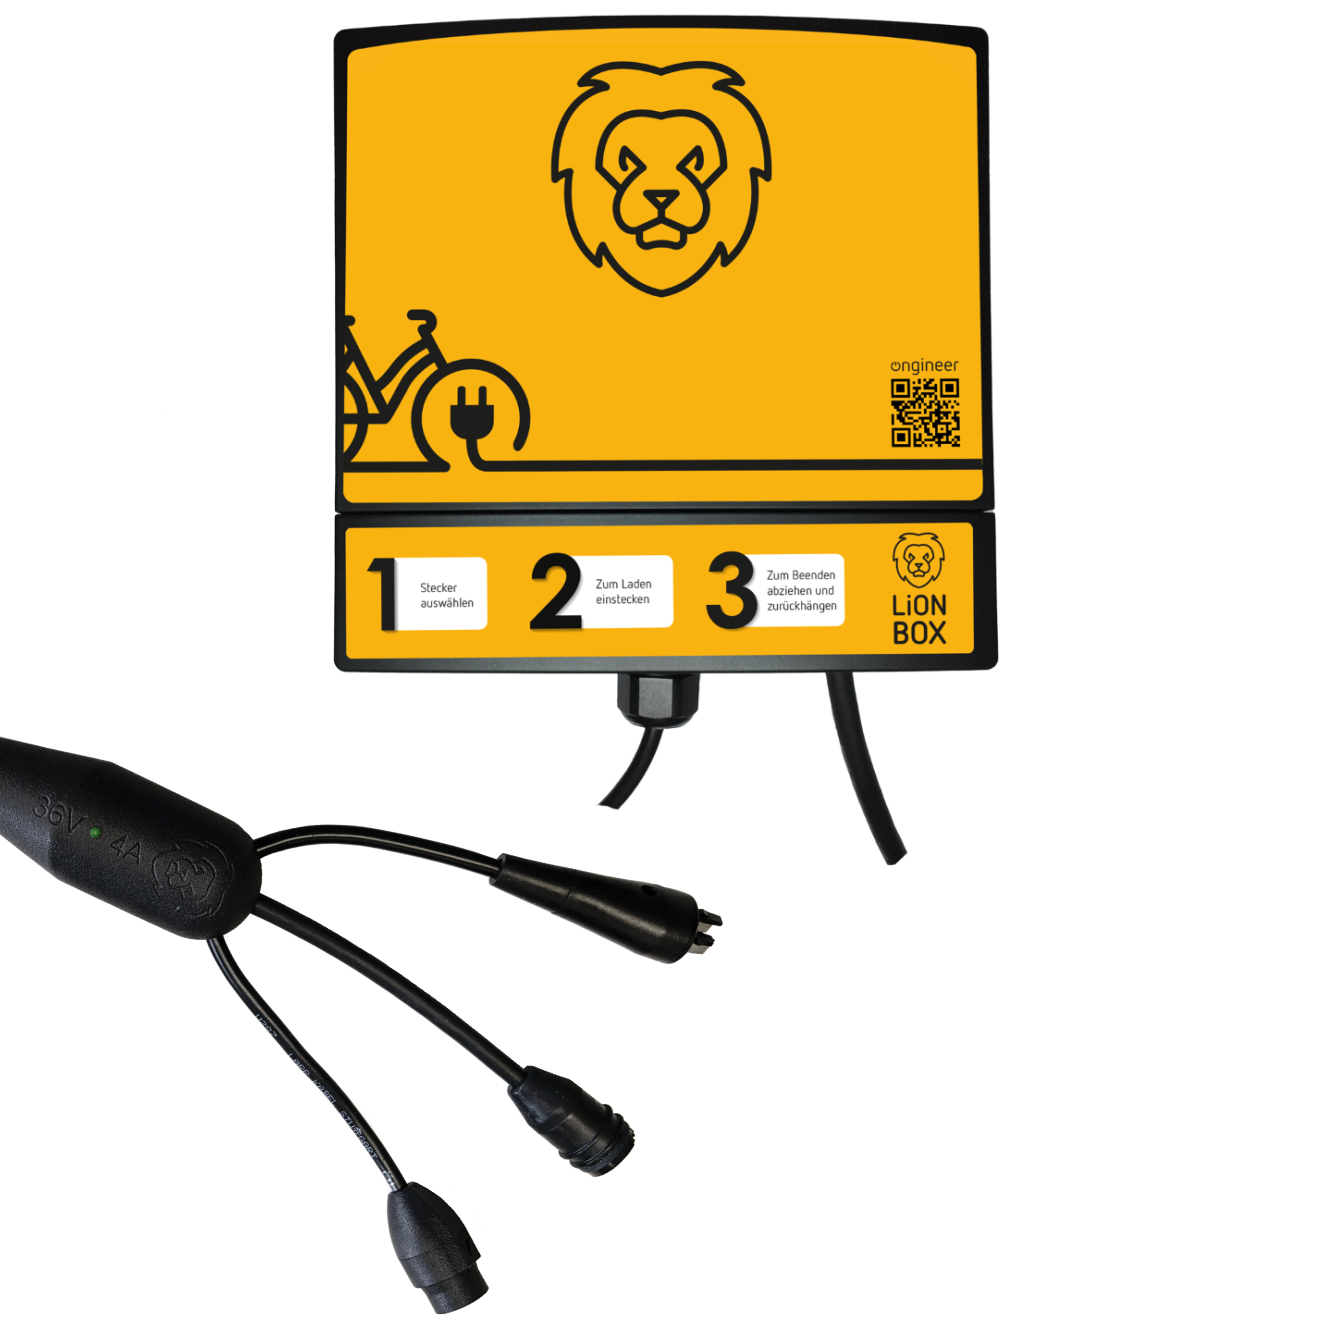 ONgineer LiON box S_BO-RO-YA - space-saving universal 36 V e-bike charging station (wallbox)